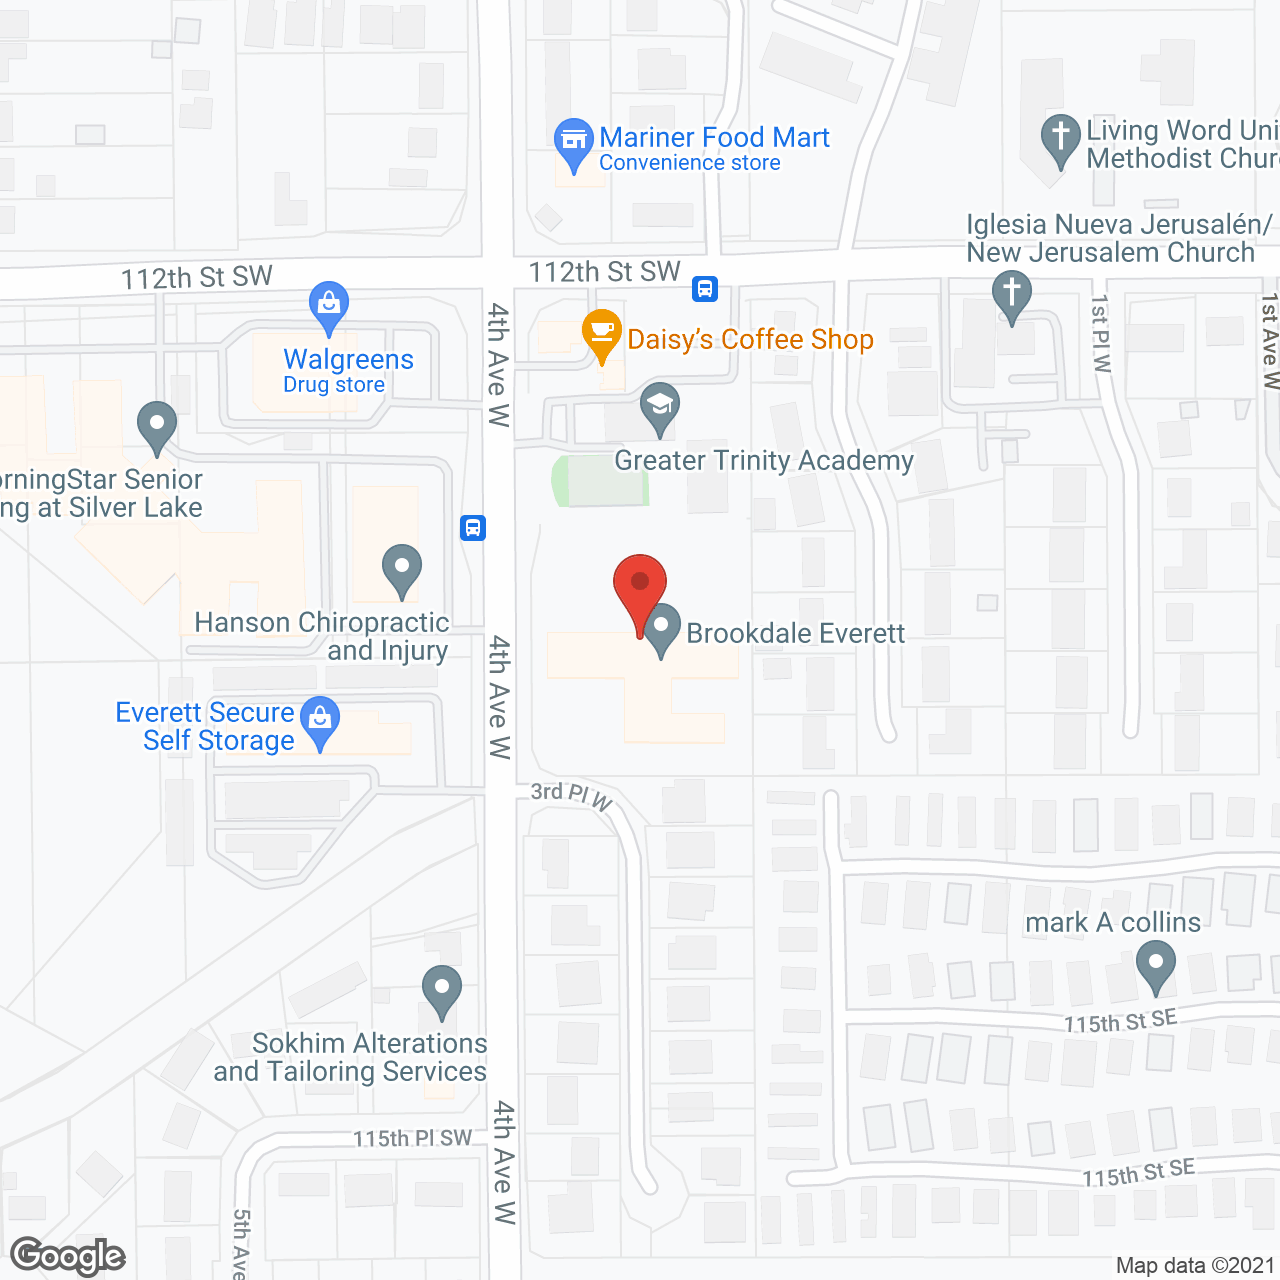 Brookdale Everett in google map